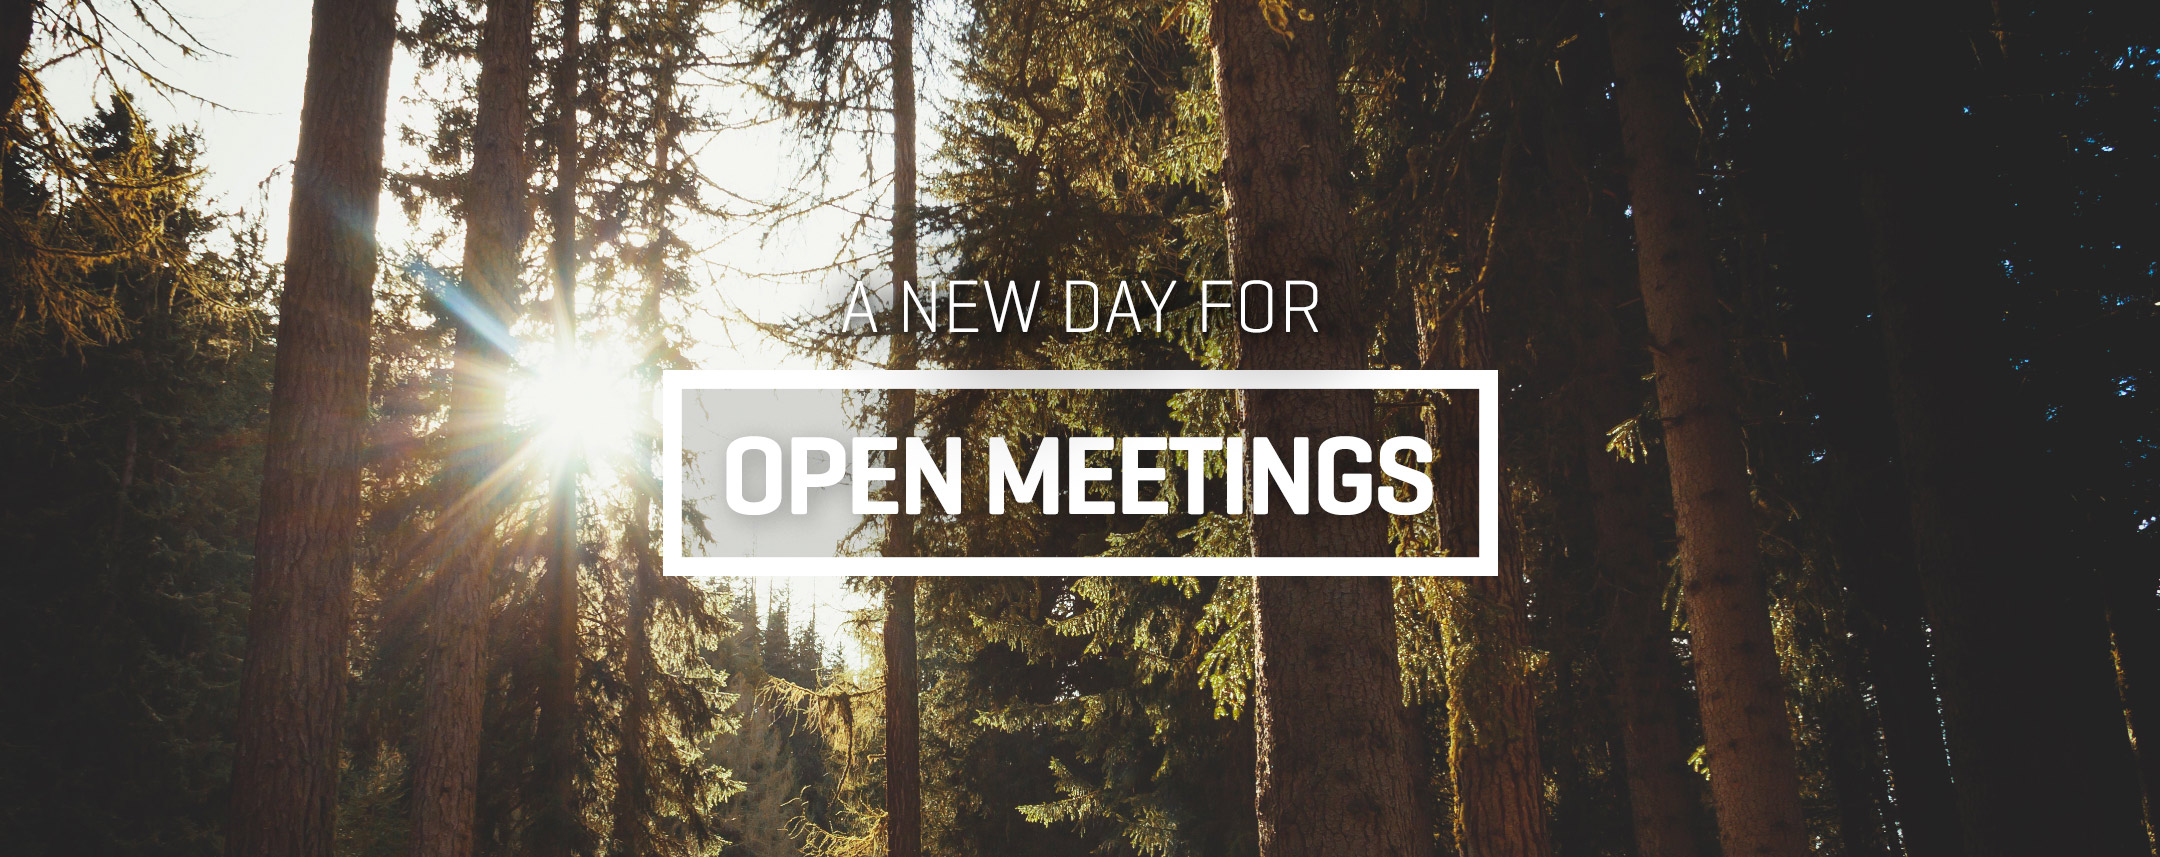 CO-Open-Meetings-FEATURED.jpg